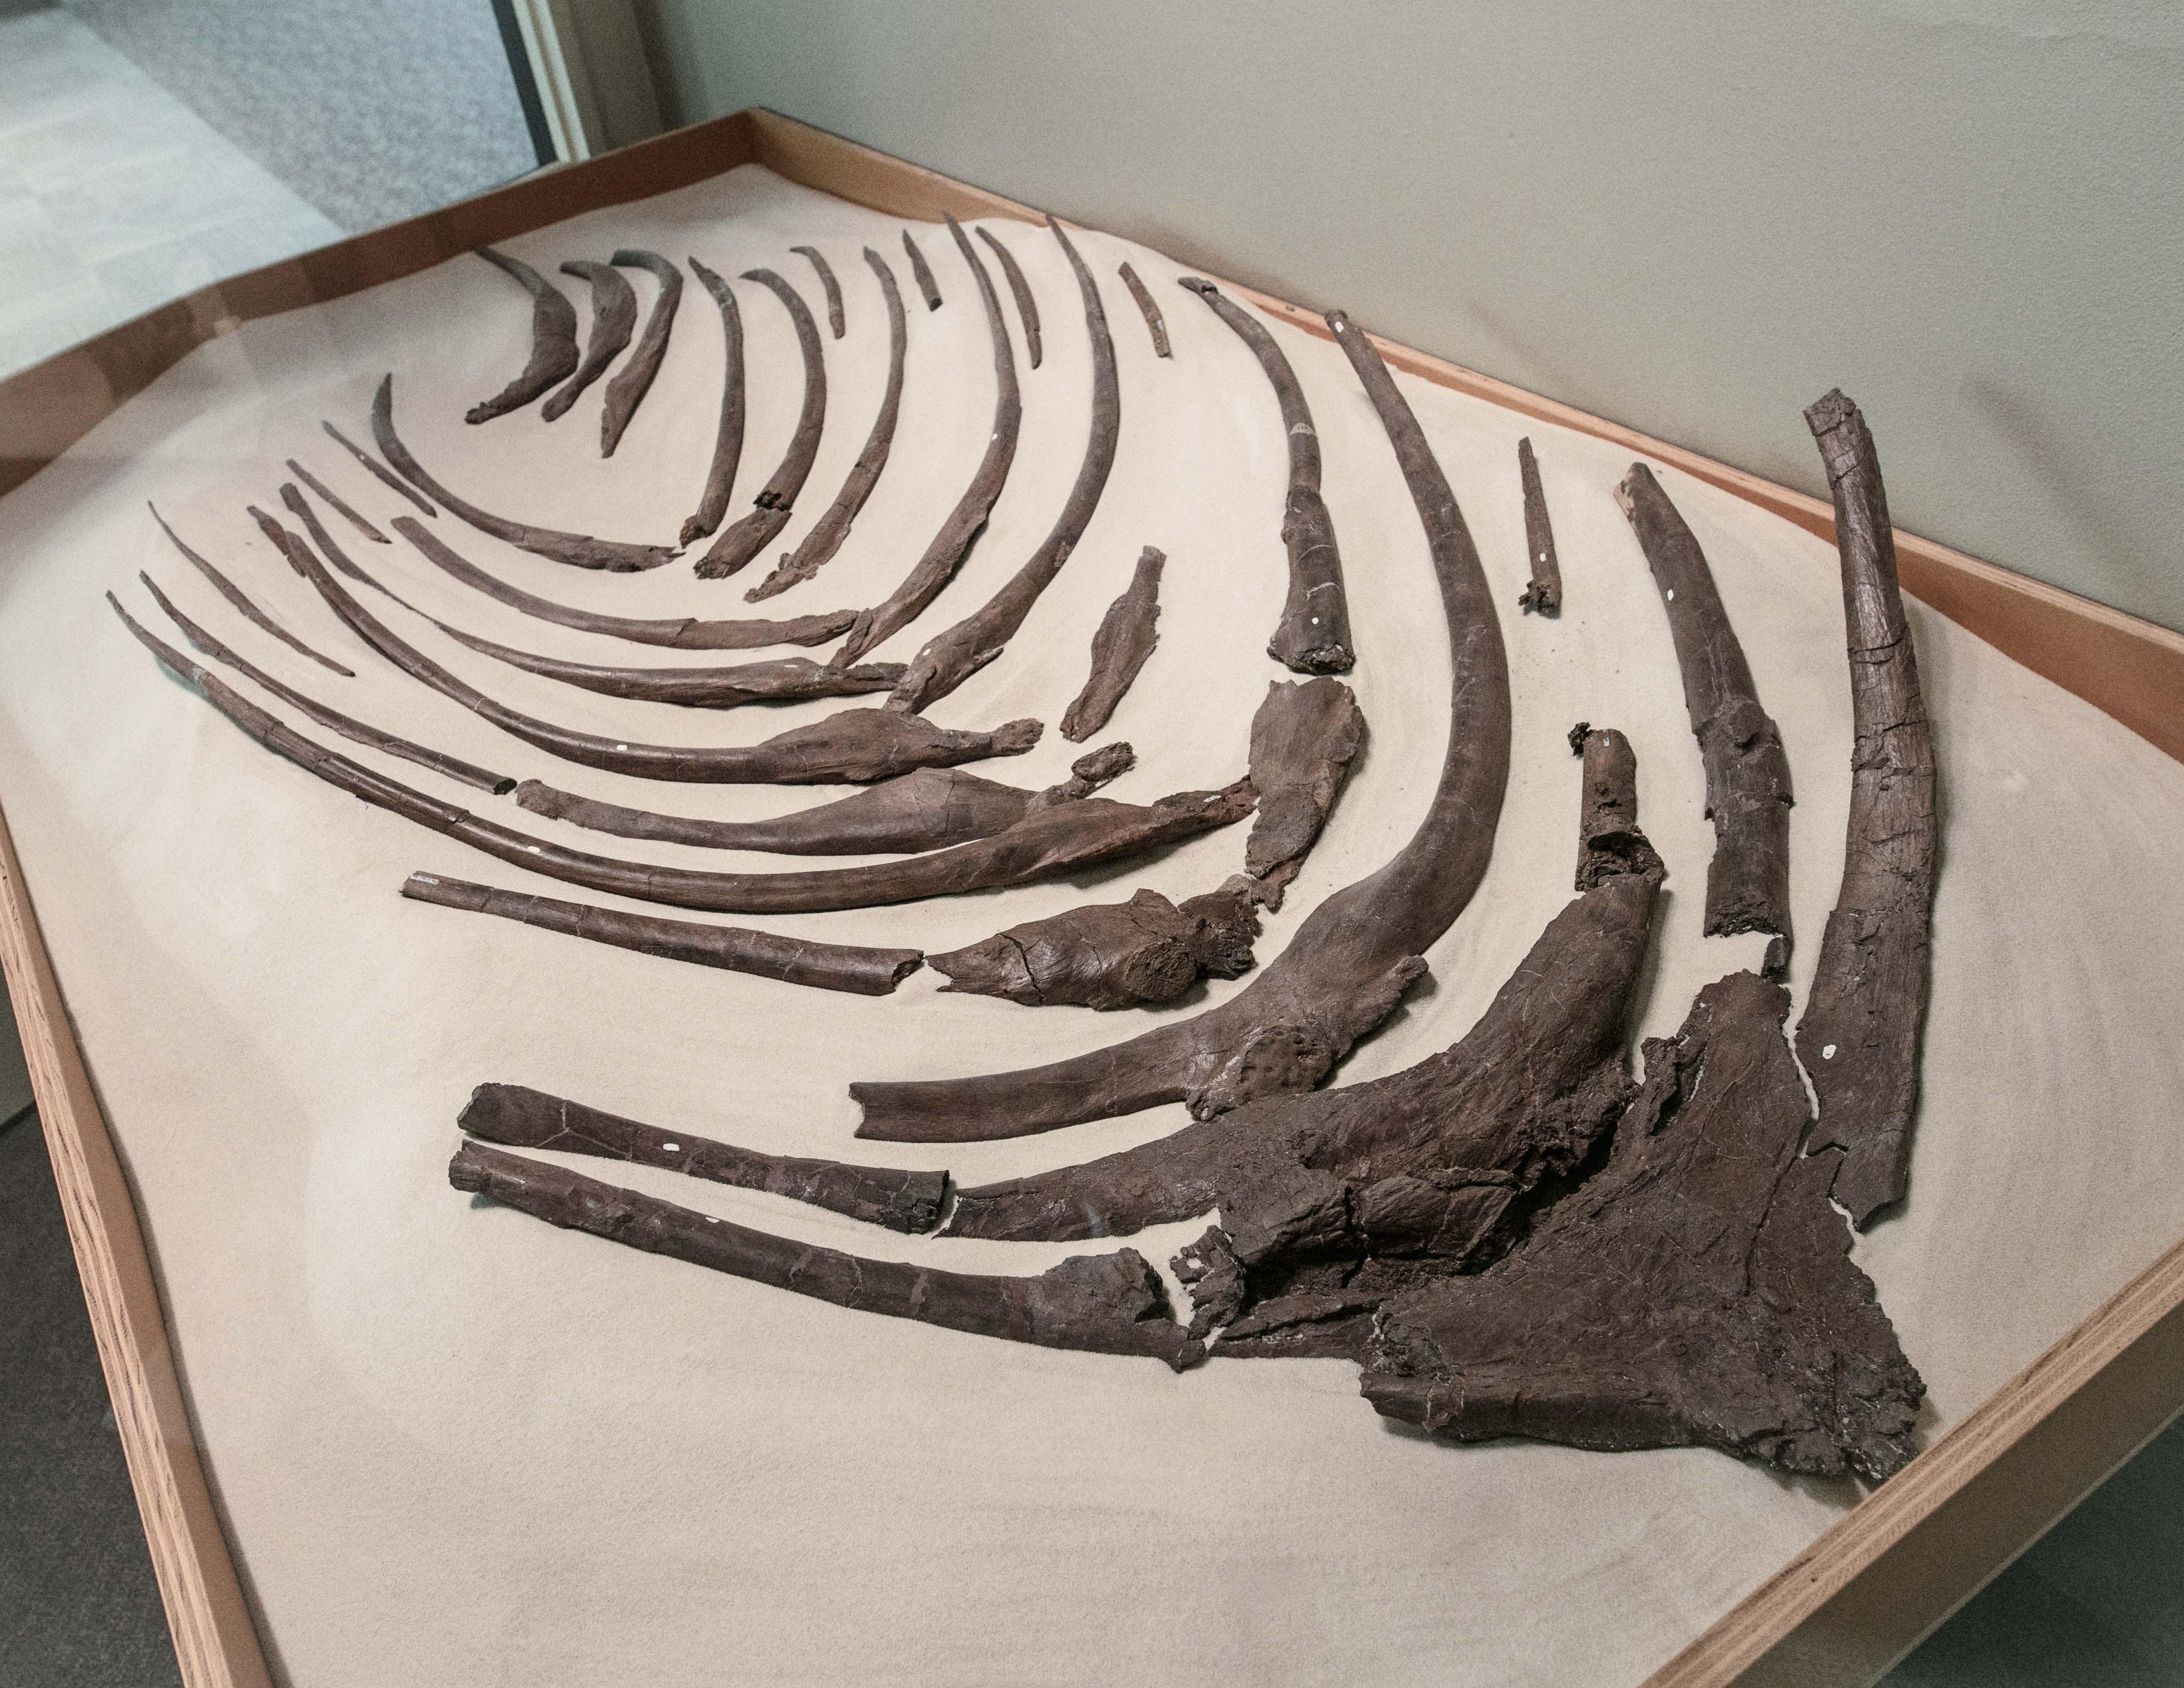 Sue’s fossilized gastralia (Zachary James Johnston / The Field Museum)